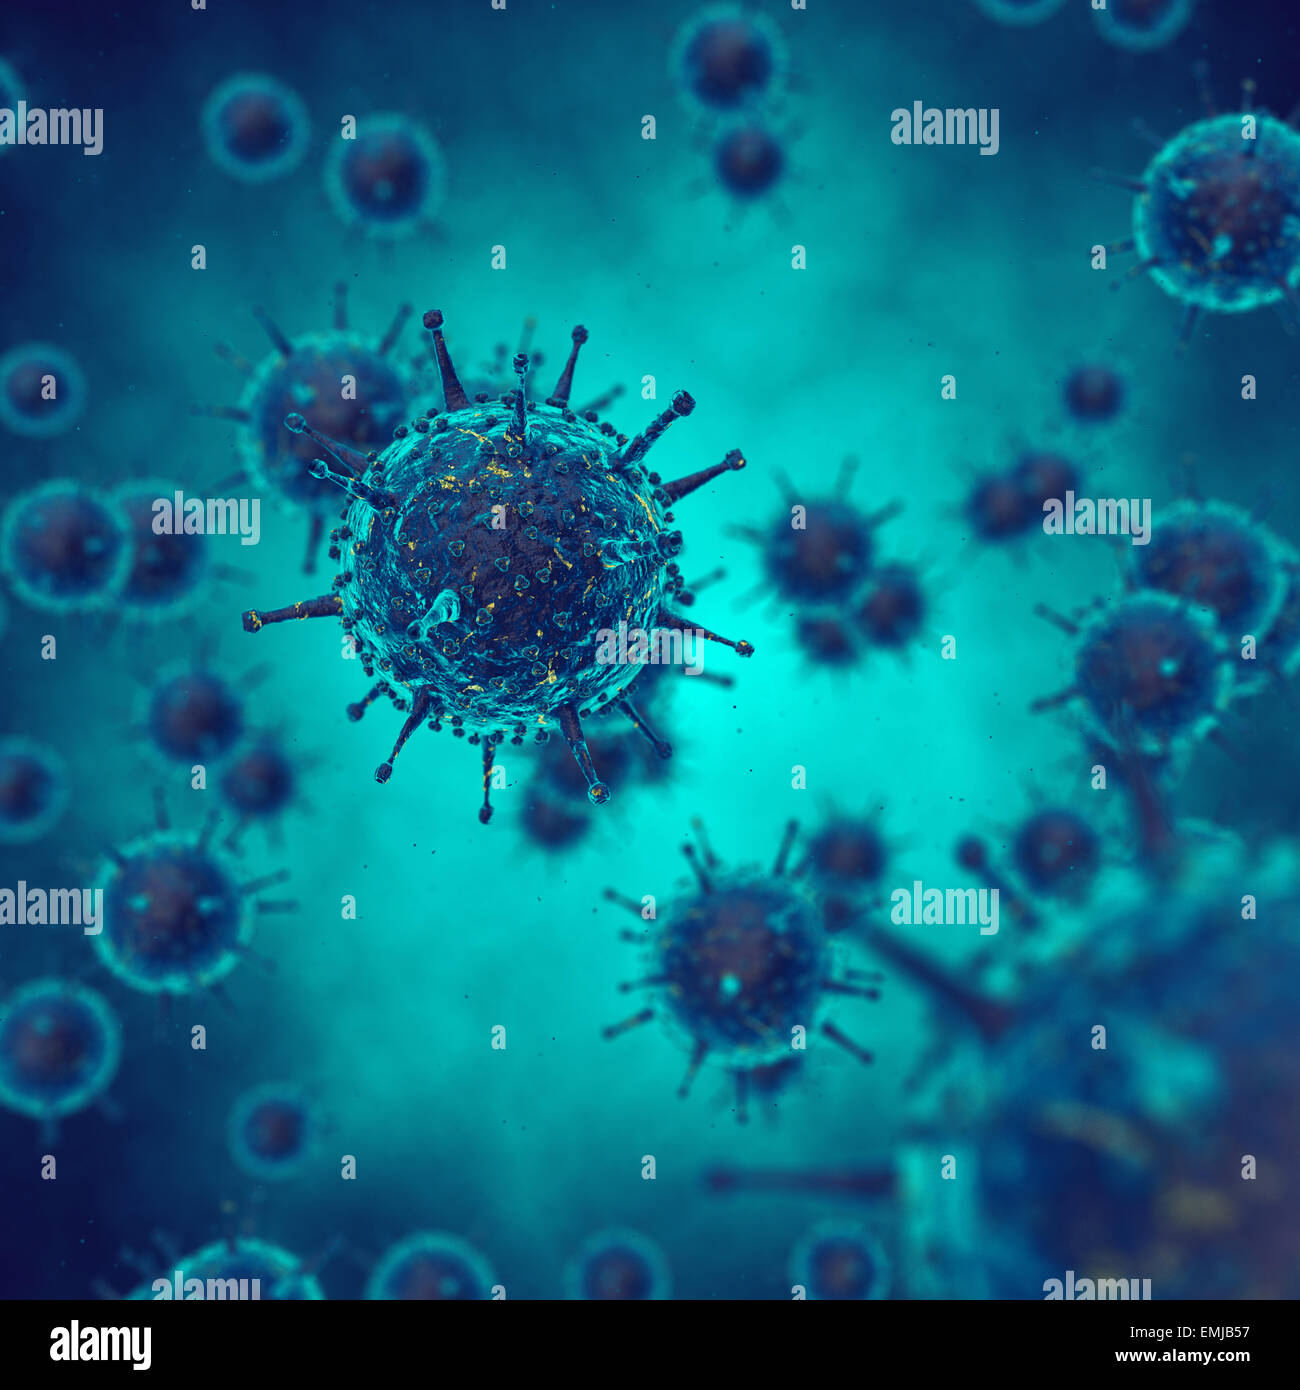 Viruses in infected organism , viral disease epidemic Stock Photo